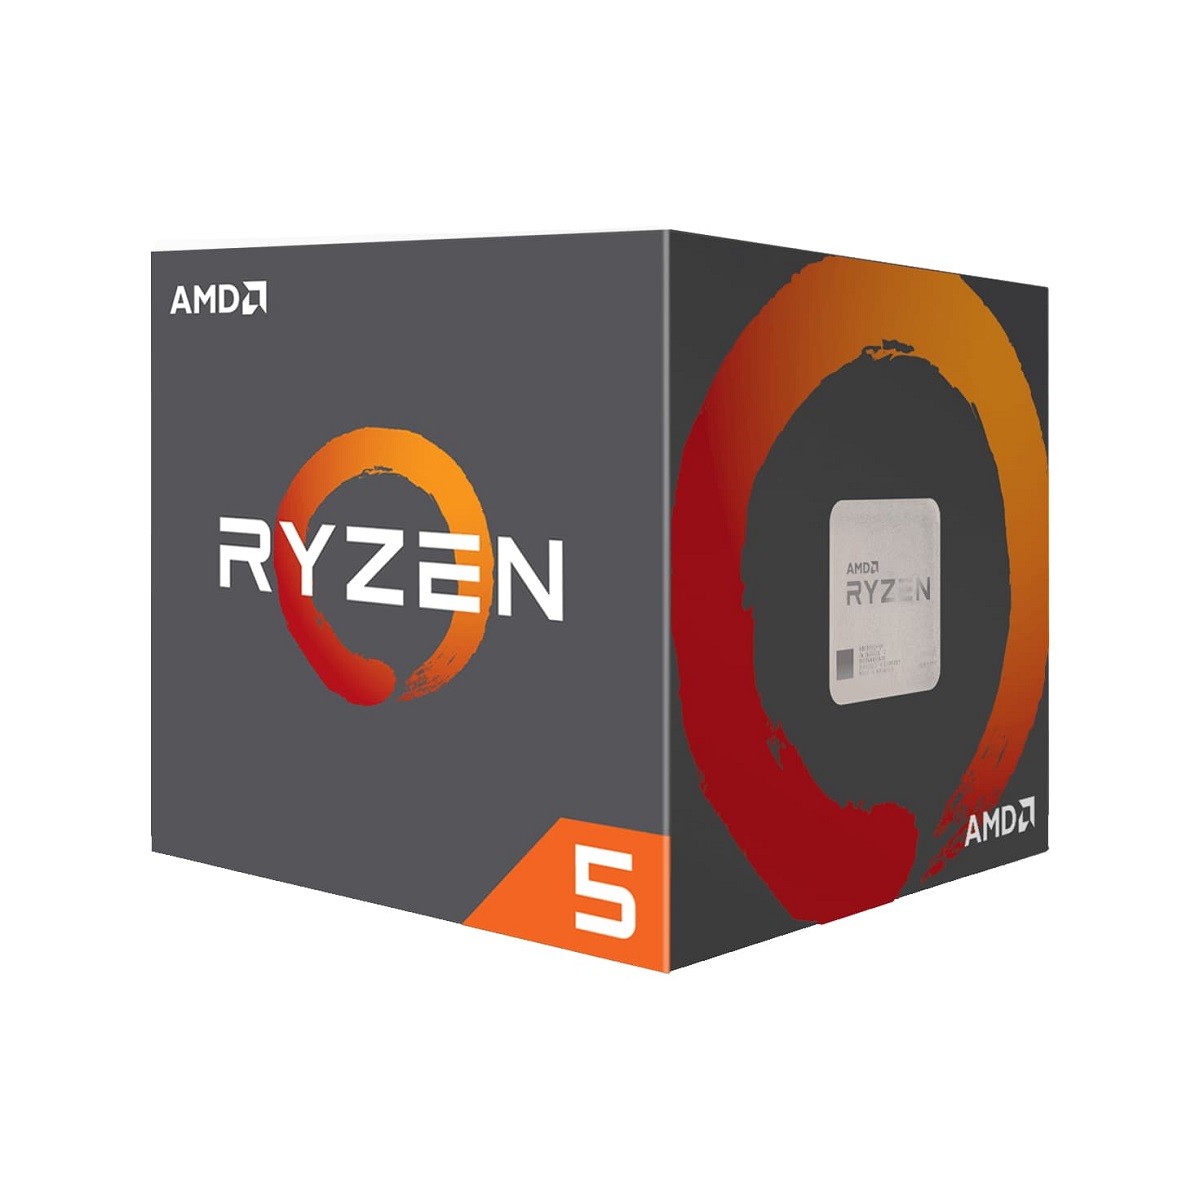 AMD AMD Ryzen 5 1600 BOX パソコン用CPUの商品画像